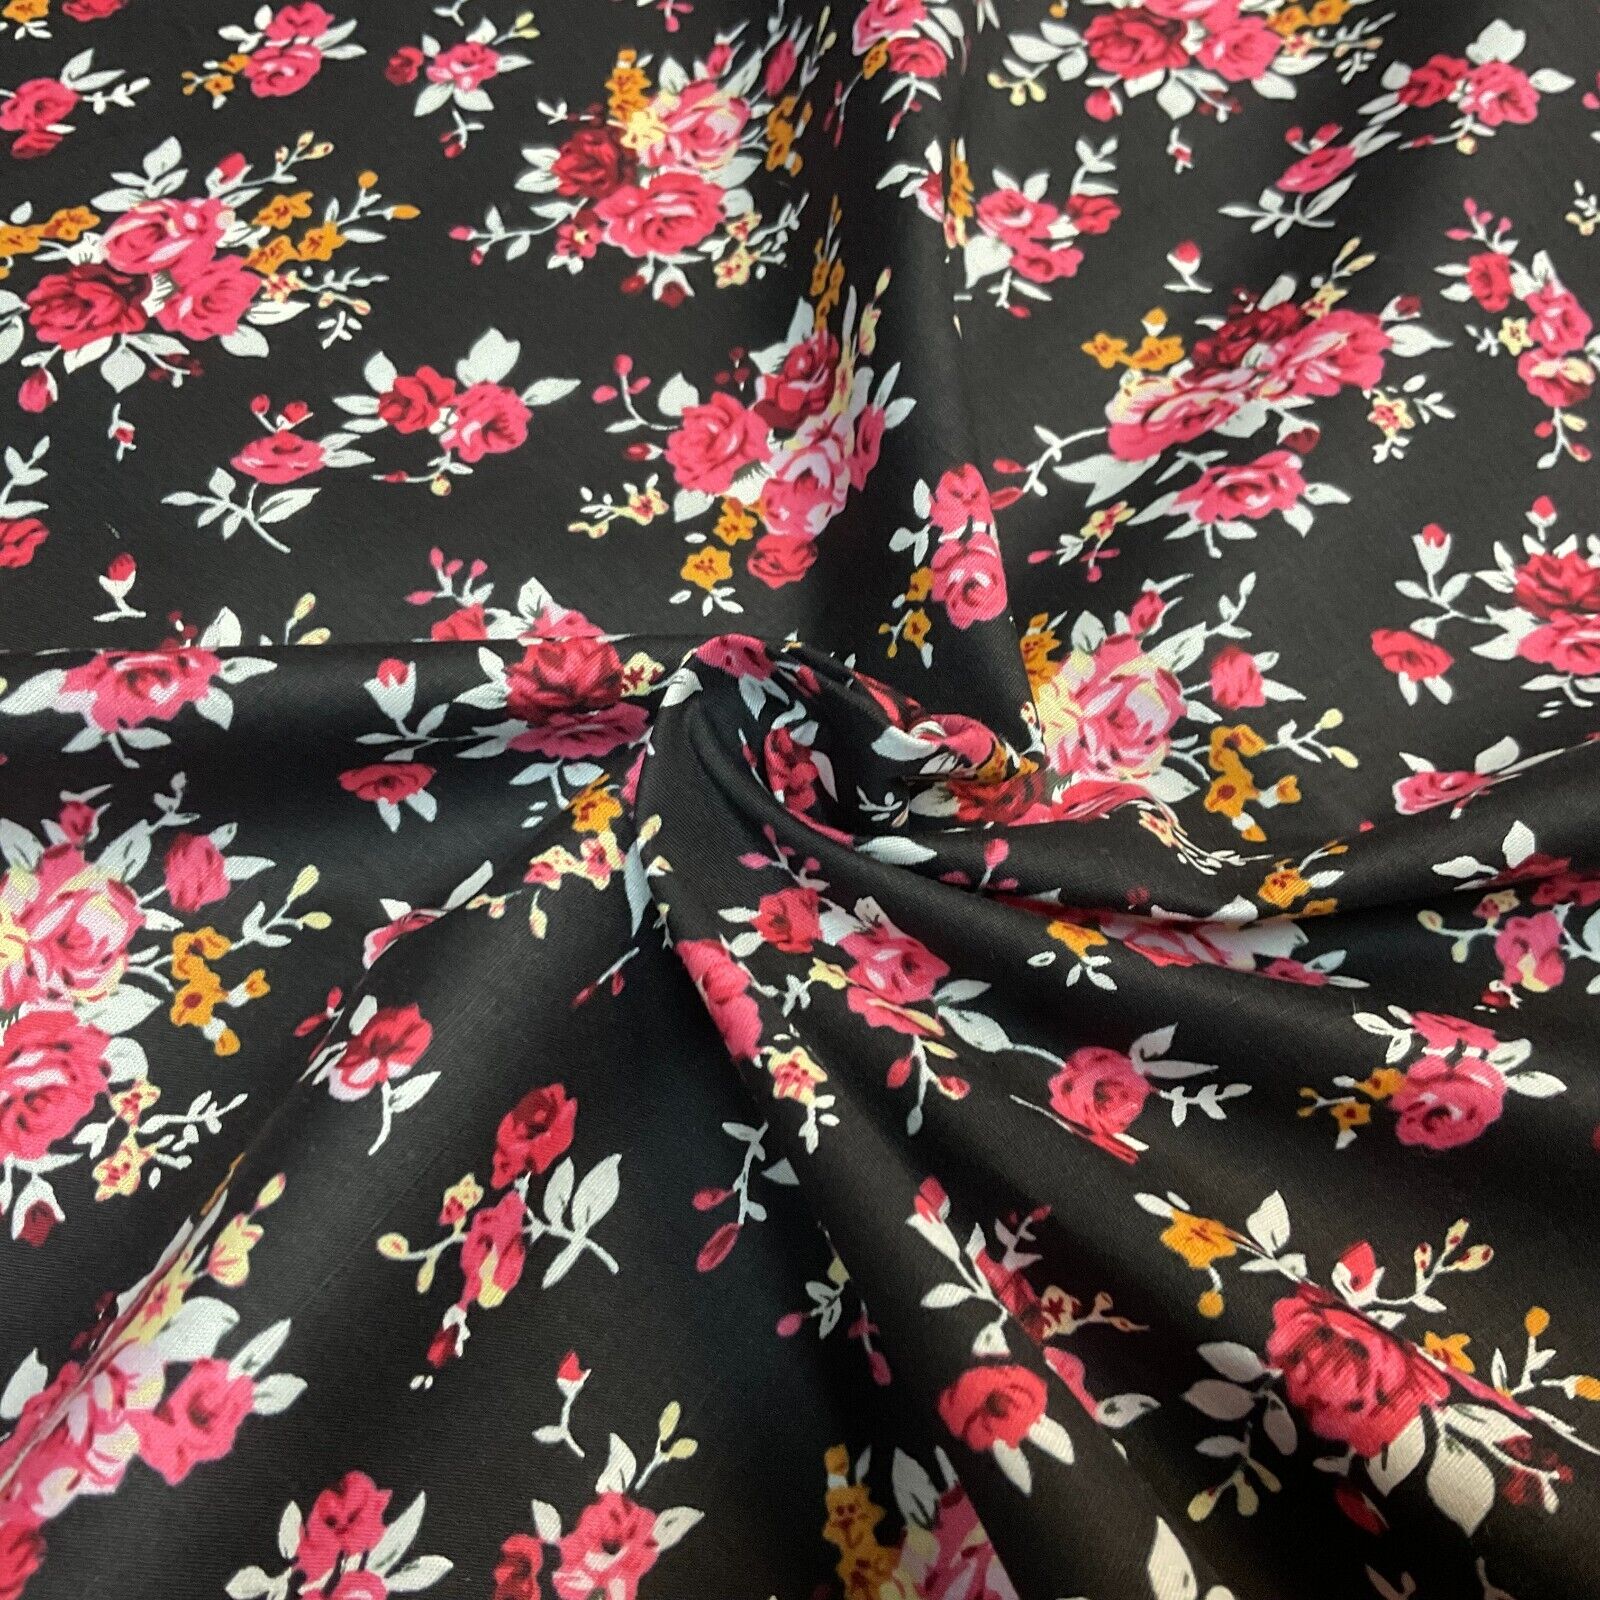 Vintage Rose Floral 100% cotton printed dress craft fabric 150cm wide M1735